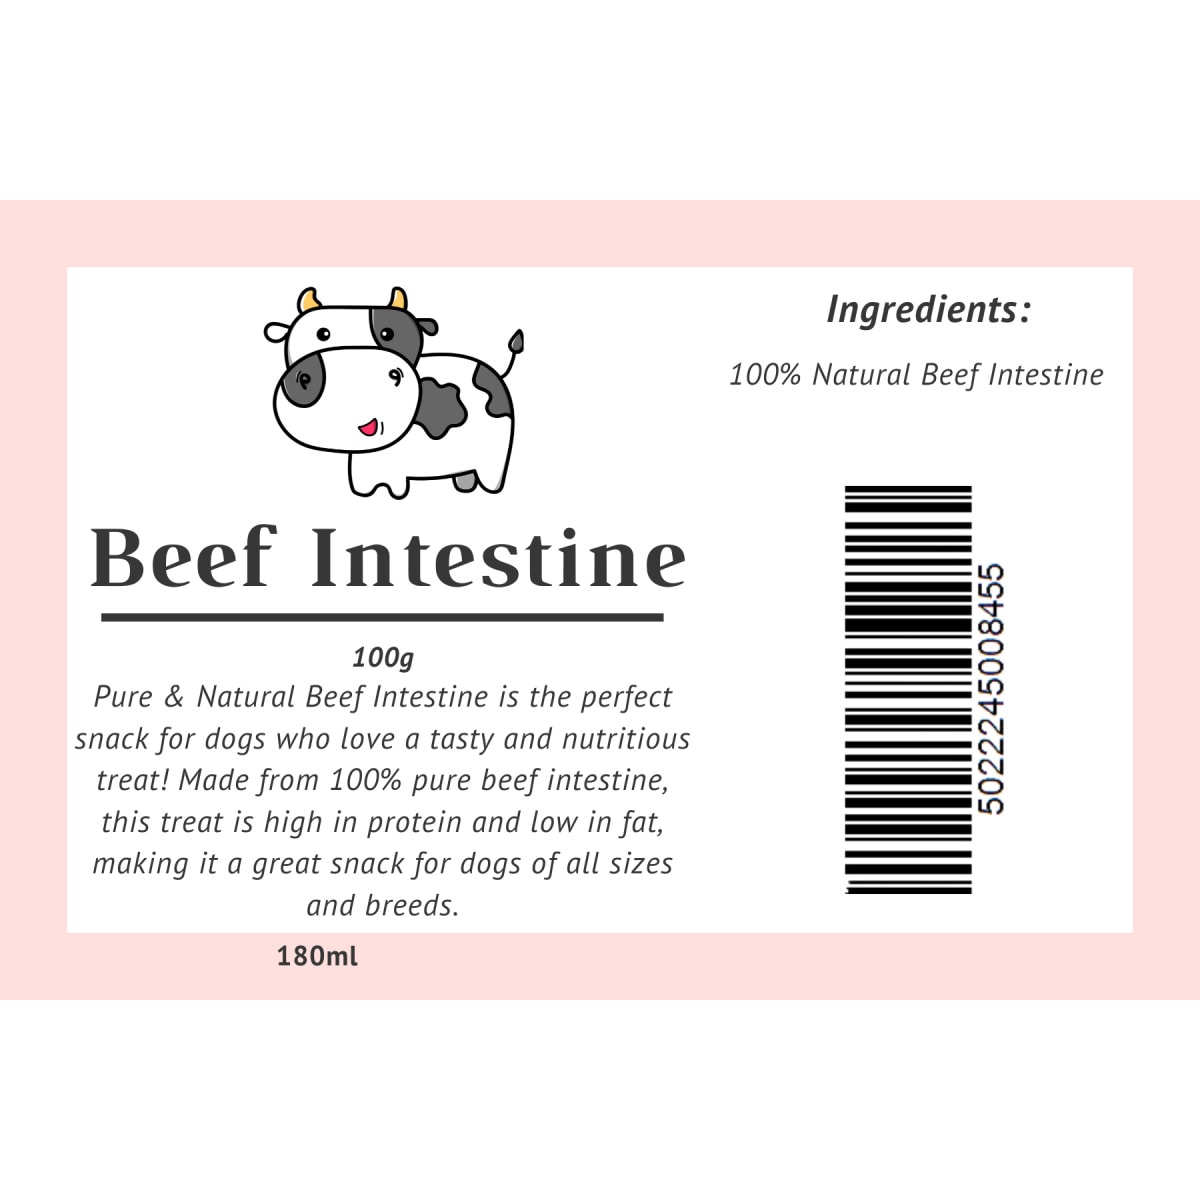 Beef Intestine 100g Main Image